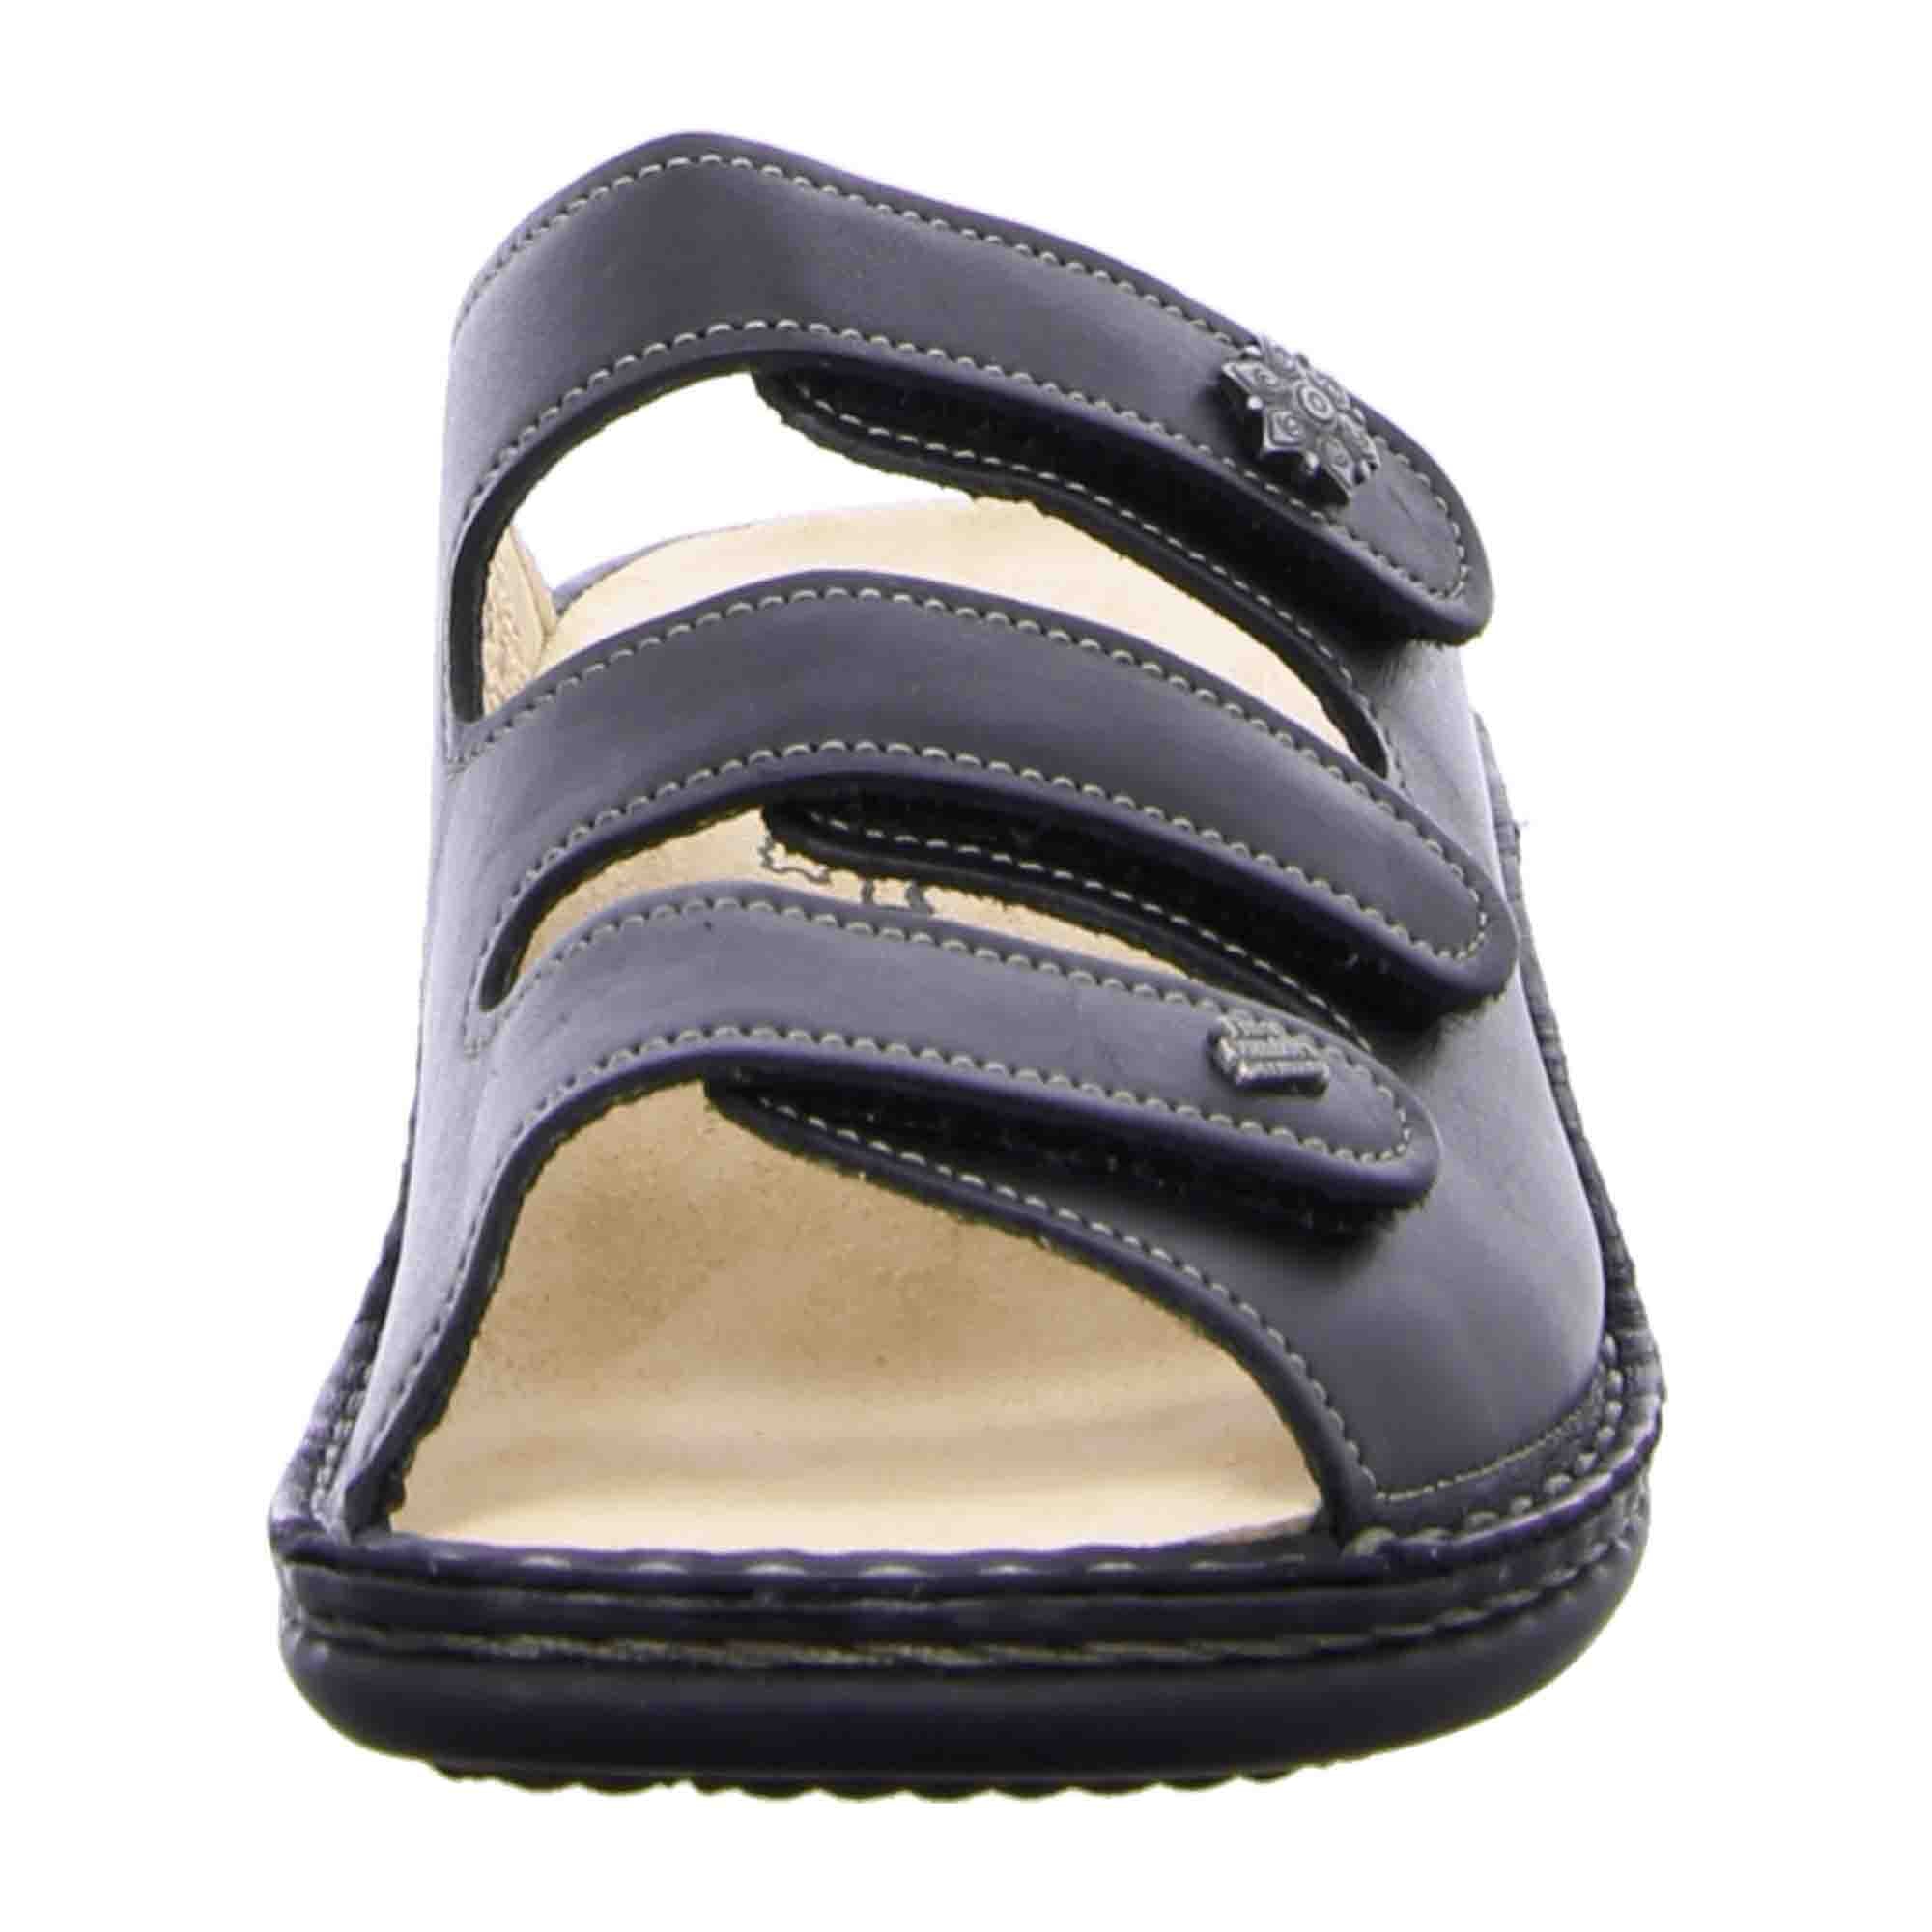 Finn Comfort Menorca-S Black Sandals for Women - Stylish & Durable